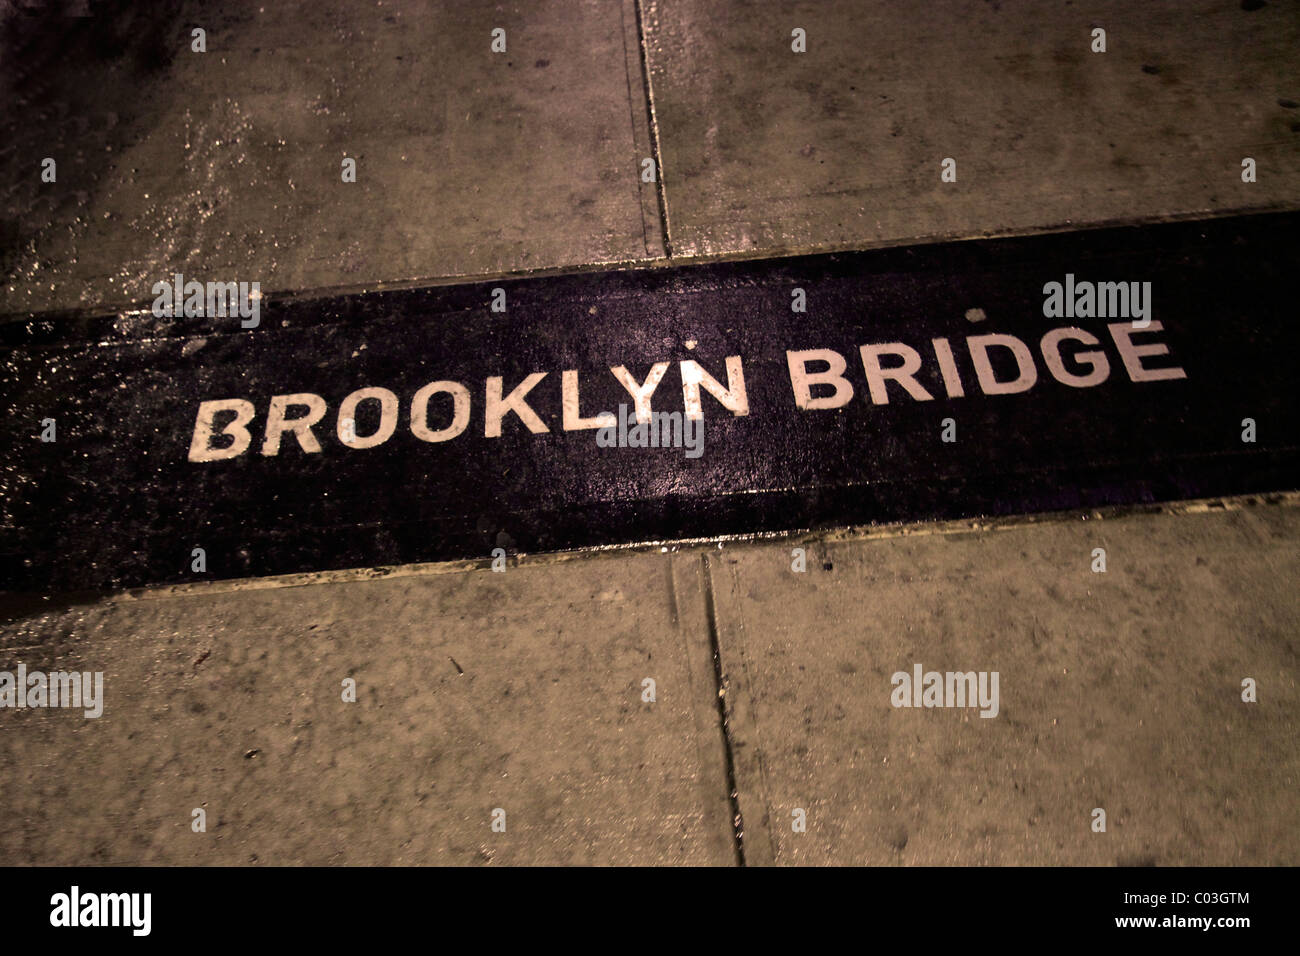 Brooklyn Bridge sign in cement Stock Photo